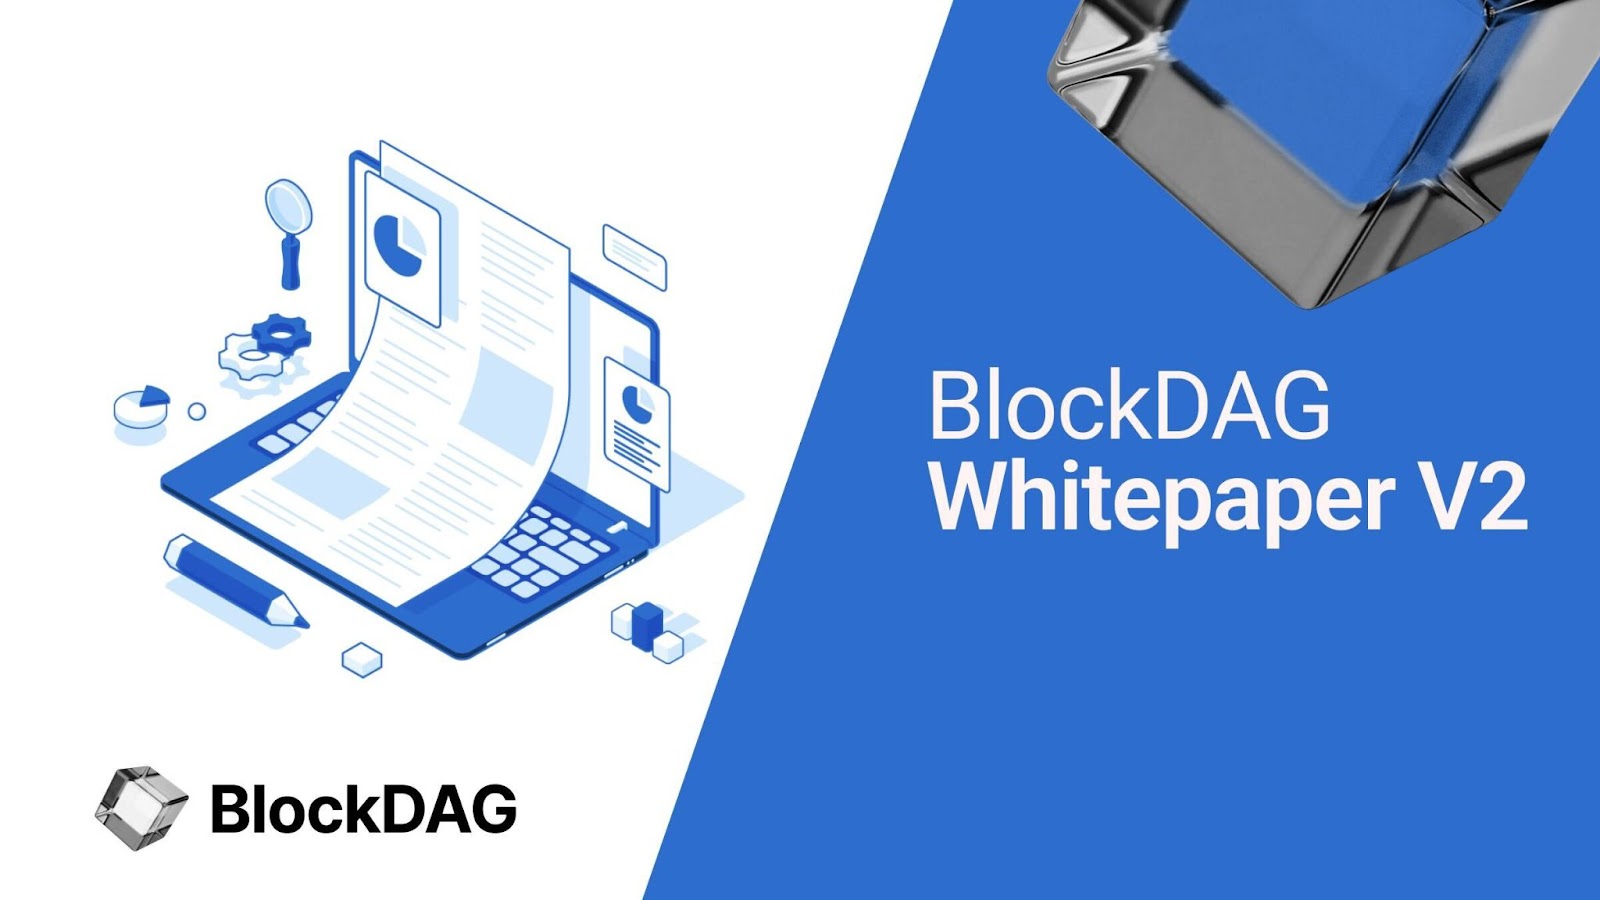 bitcoins BlockDAG's Technical Whitepaper Reveals a Revolutionary Protocol